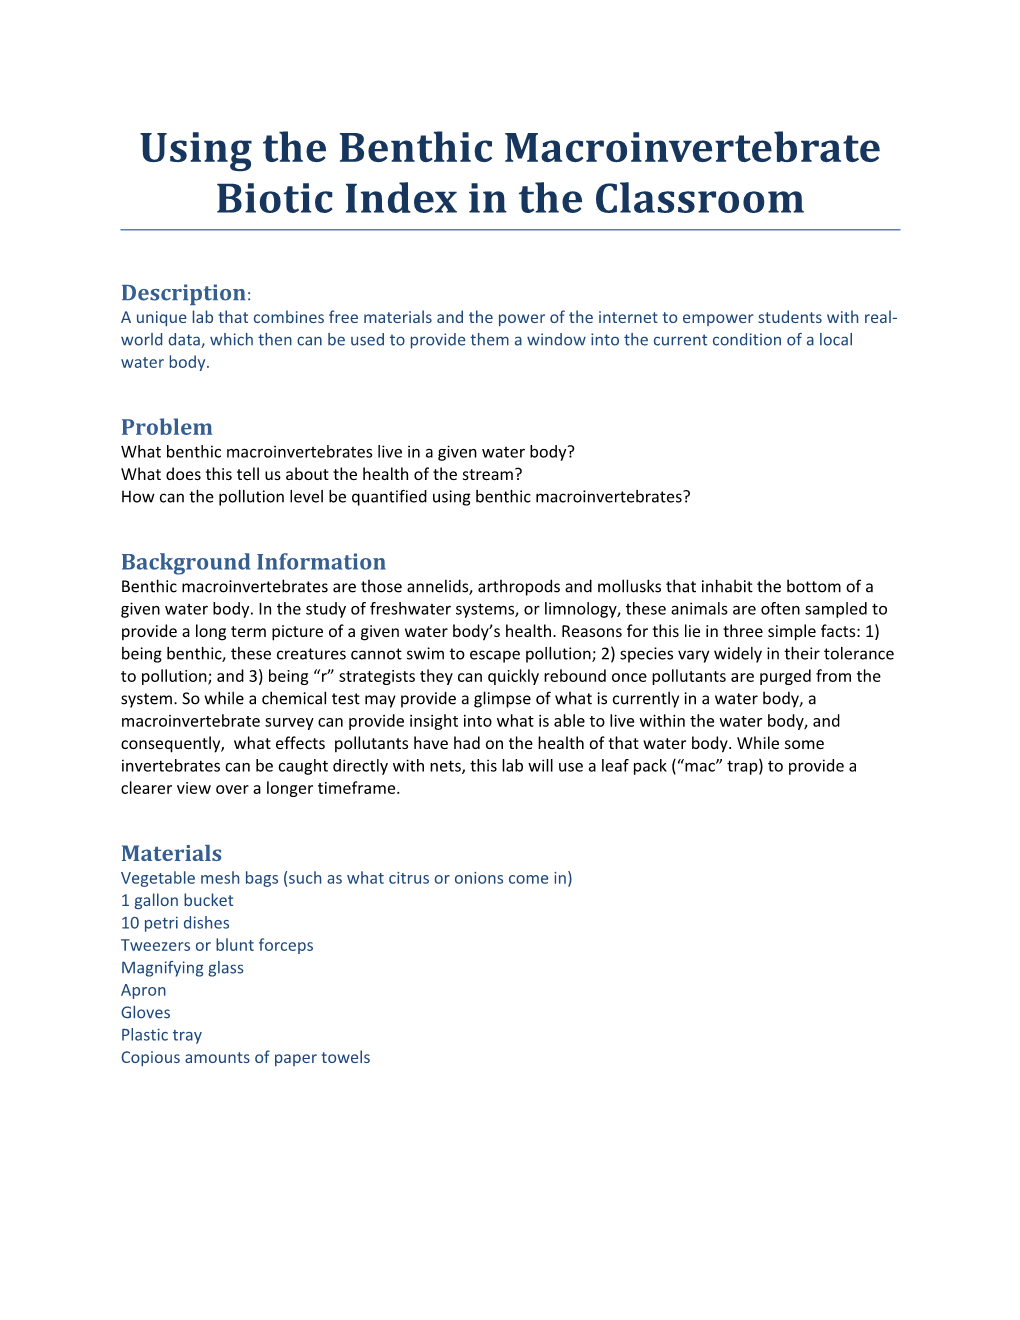 Using the Benthic Macroinvertebrate Biotic Index in the Classroom